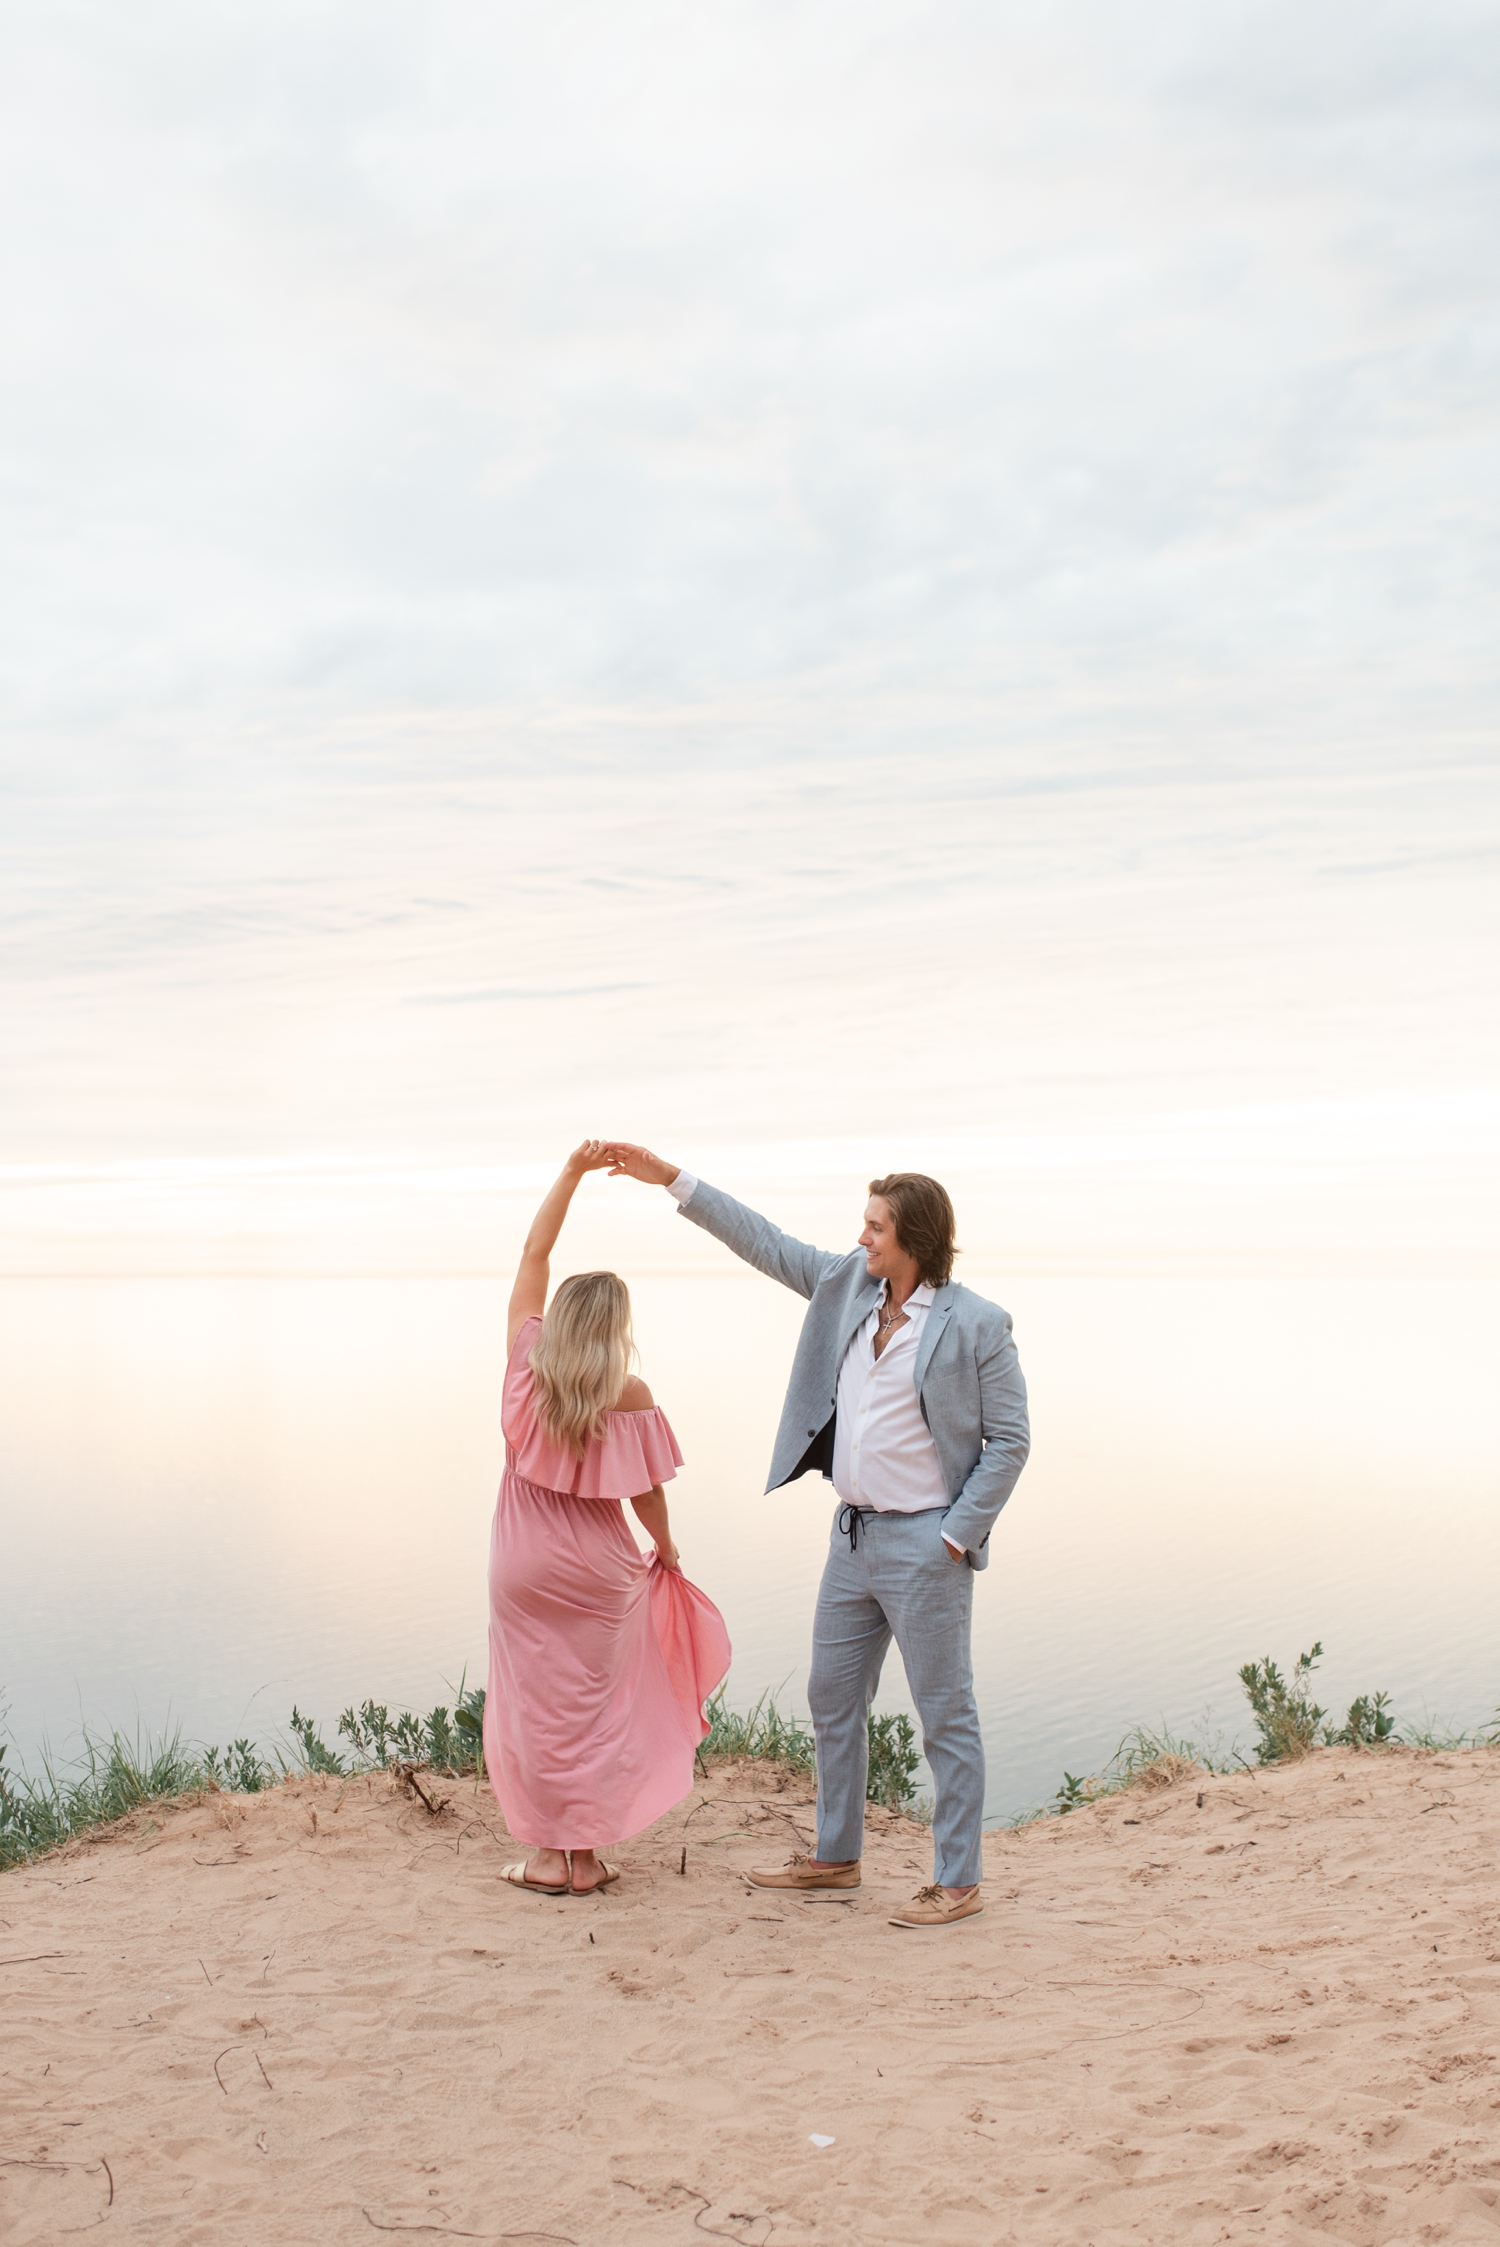 Michigan Engagement Photos at Sleeping Bear Dunes National Lakeshore by Southbend Wedding Photographer Courtney Rudicel